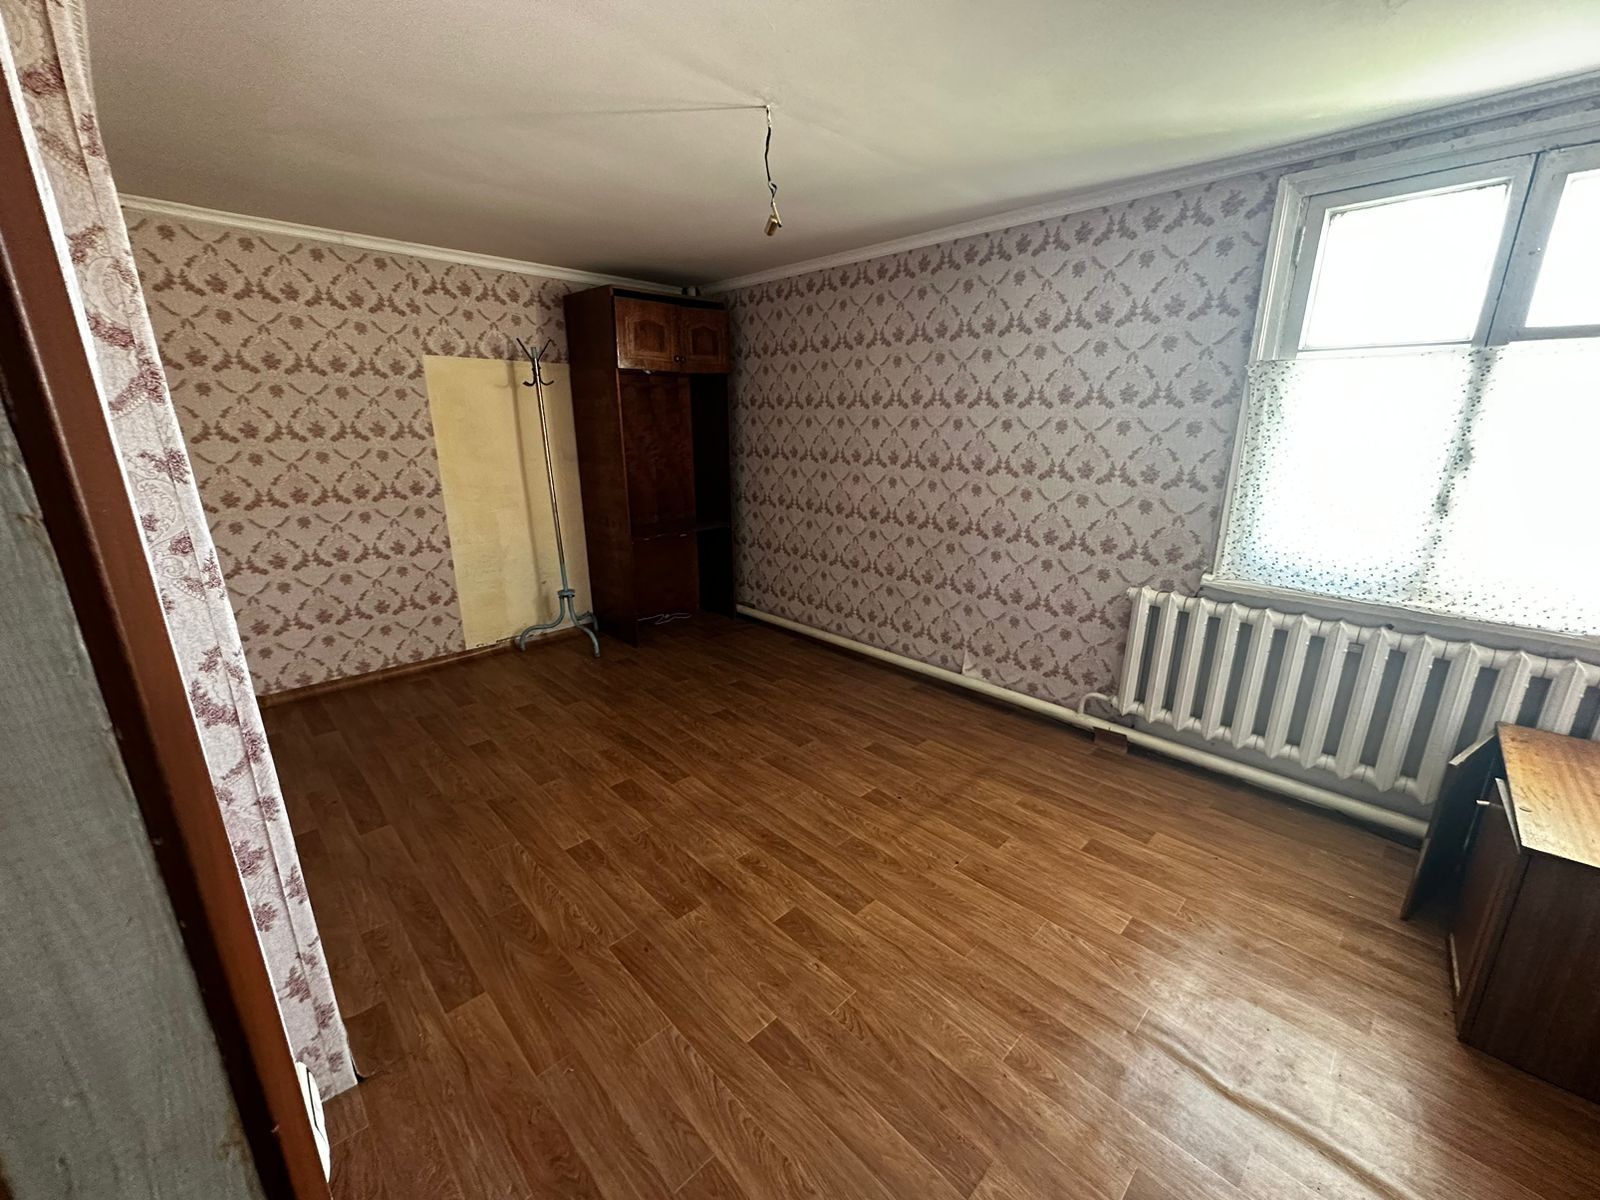 Продам дом в селе Ново Баженова